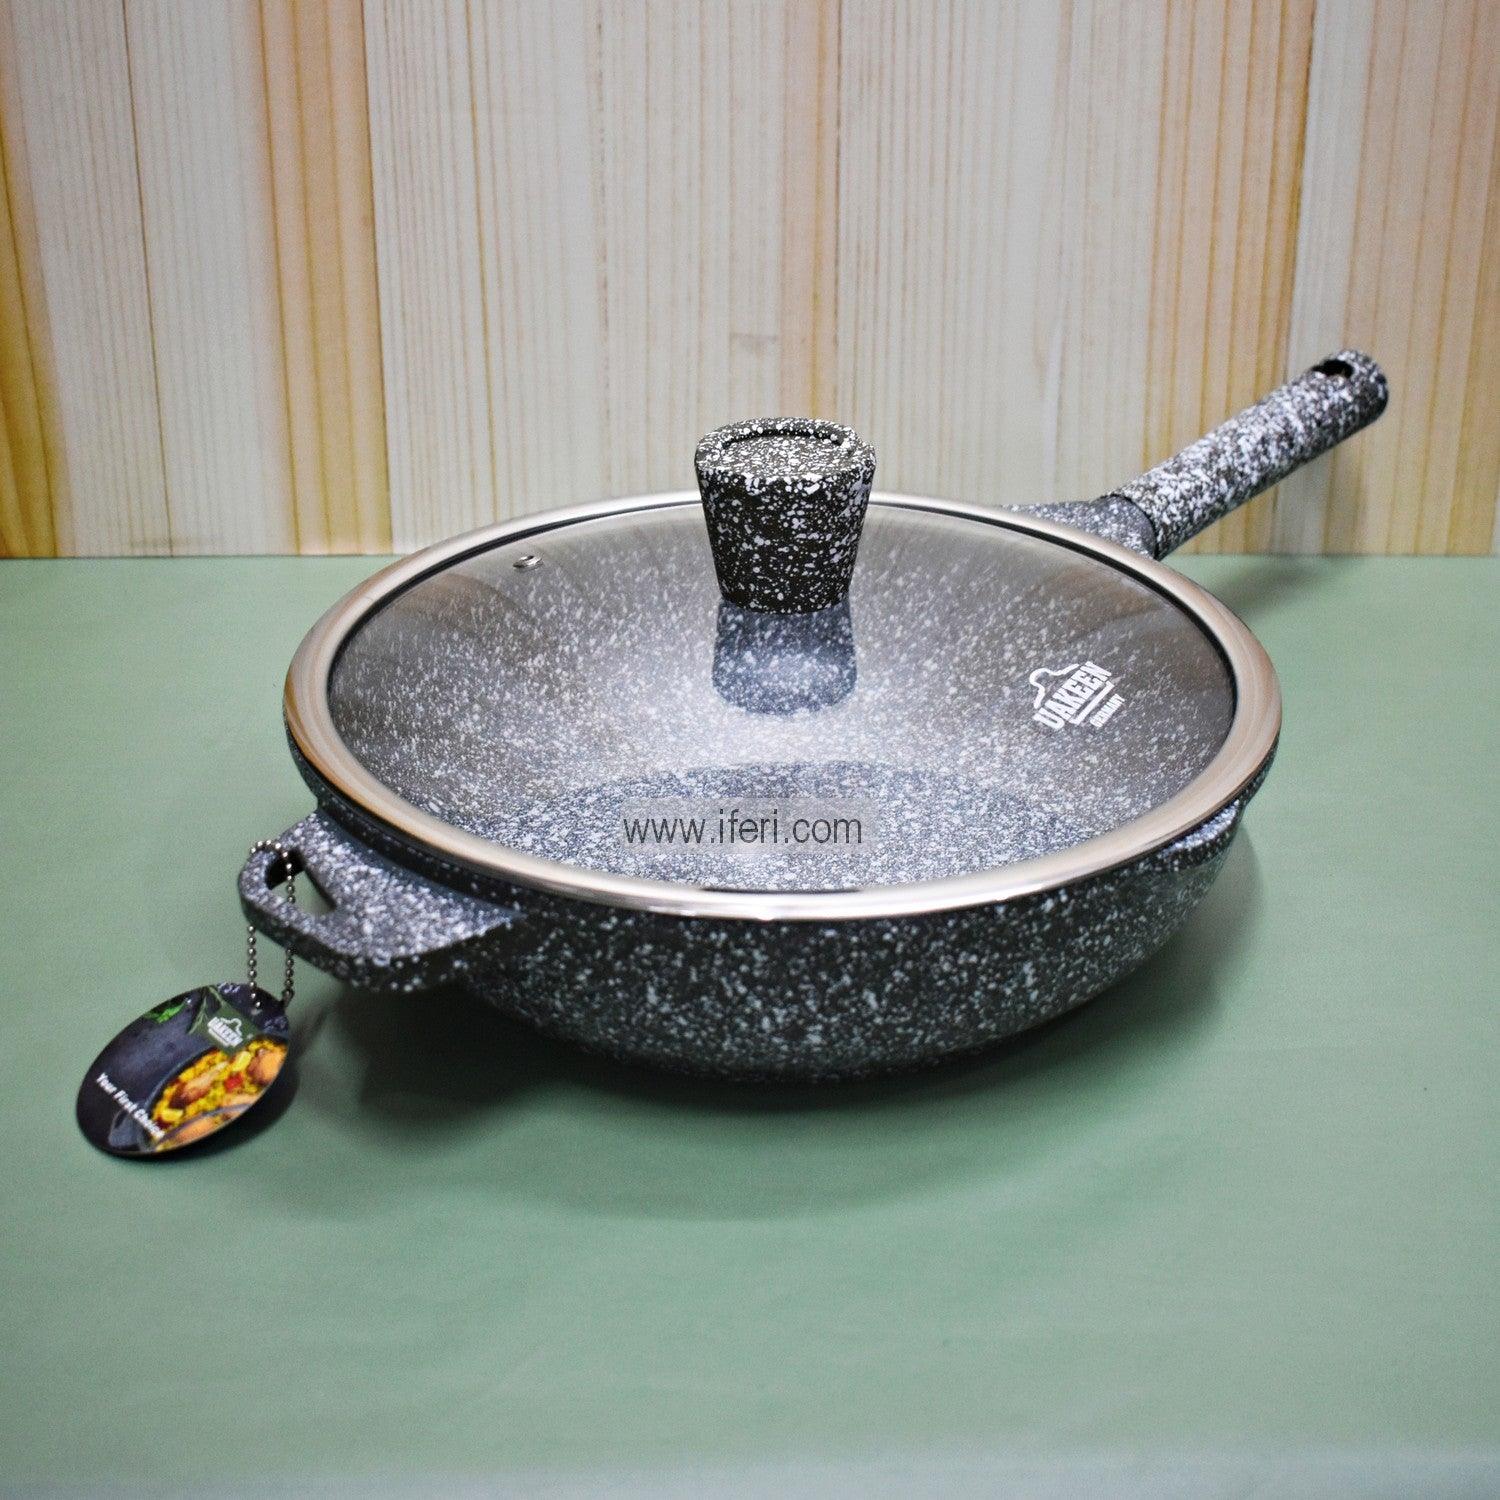 Uakeen Non-Stick Granite Coated Wok Pan With Lid RH1855 Price in Bangladesh - iferi.com